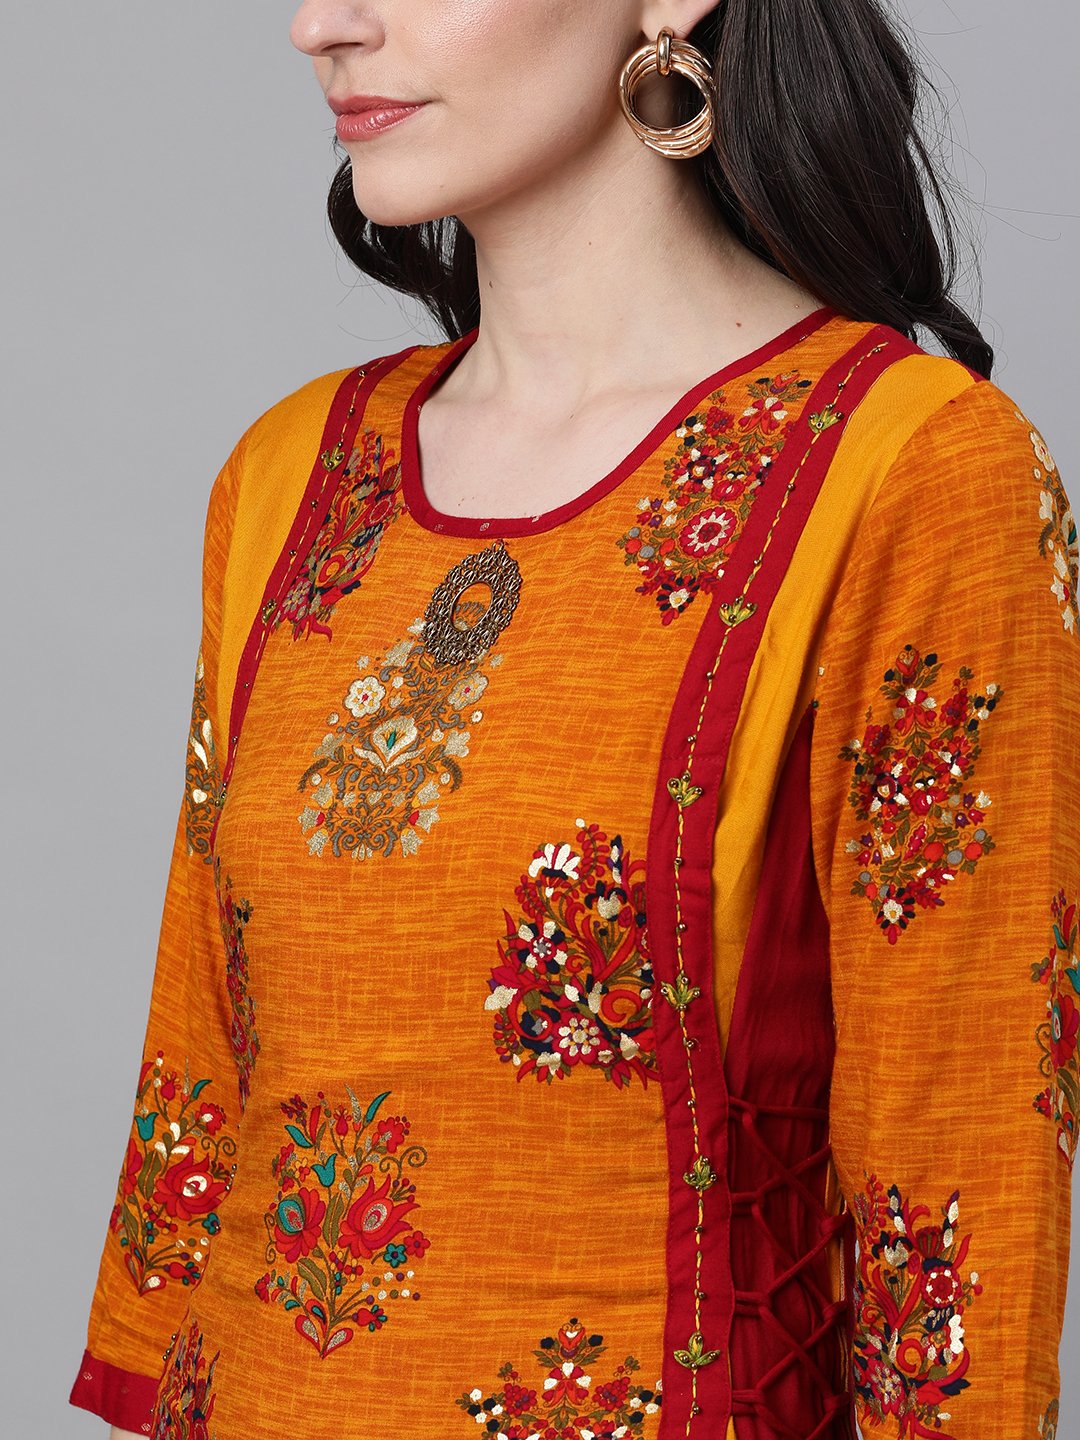 Ishin Women's Rayon Orange & Maroon Embellished Layered High Slit Kurta